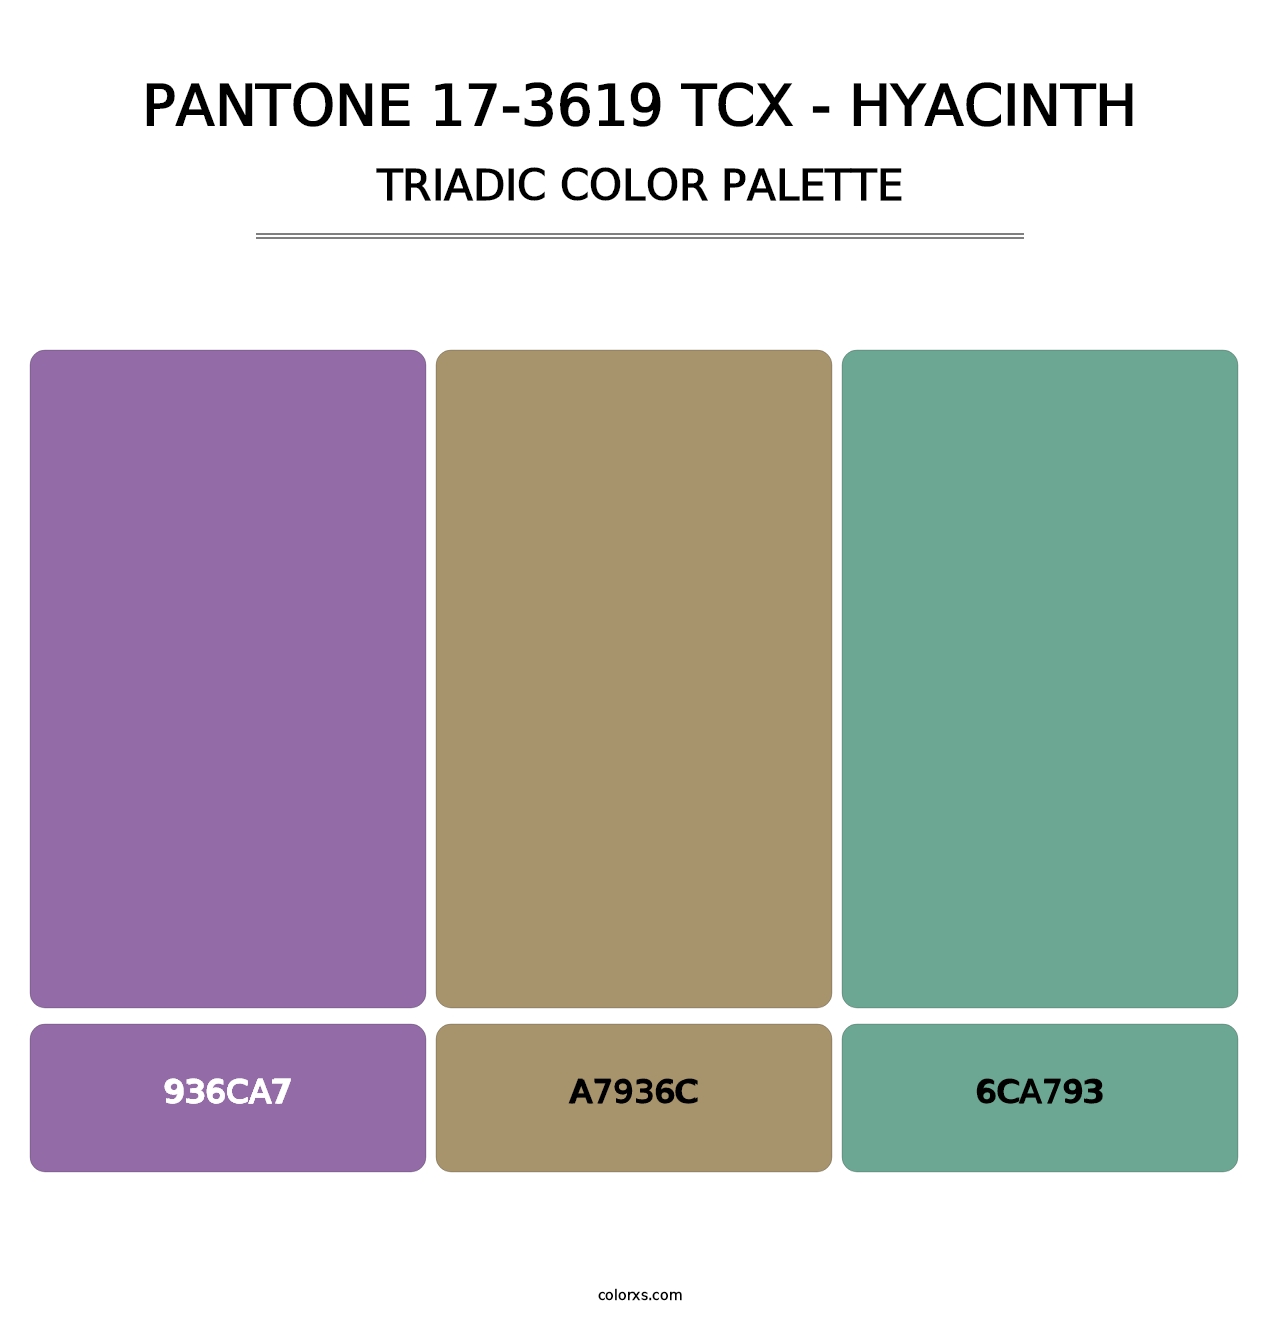 PANTONE 17-3619 TCX - Hyacinth - Triadic Color Palette